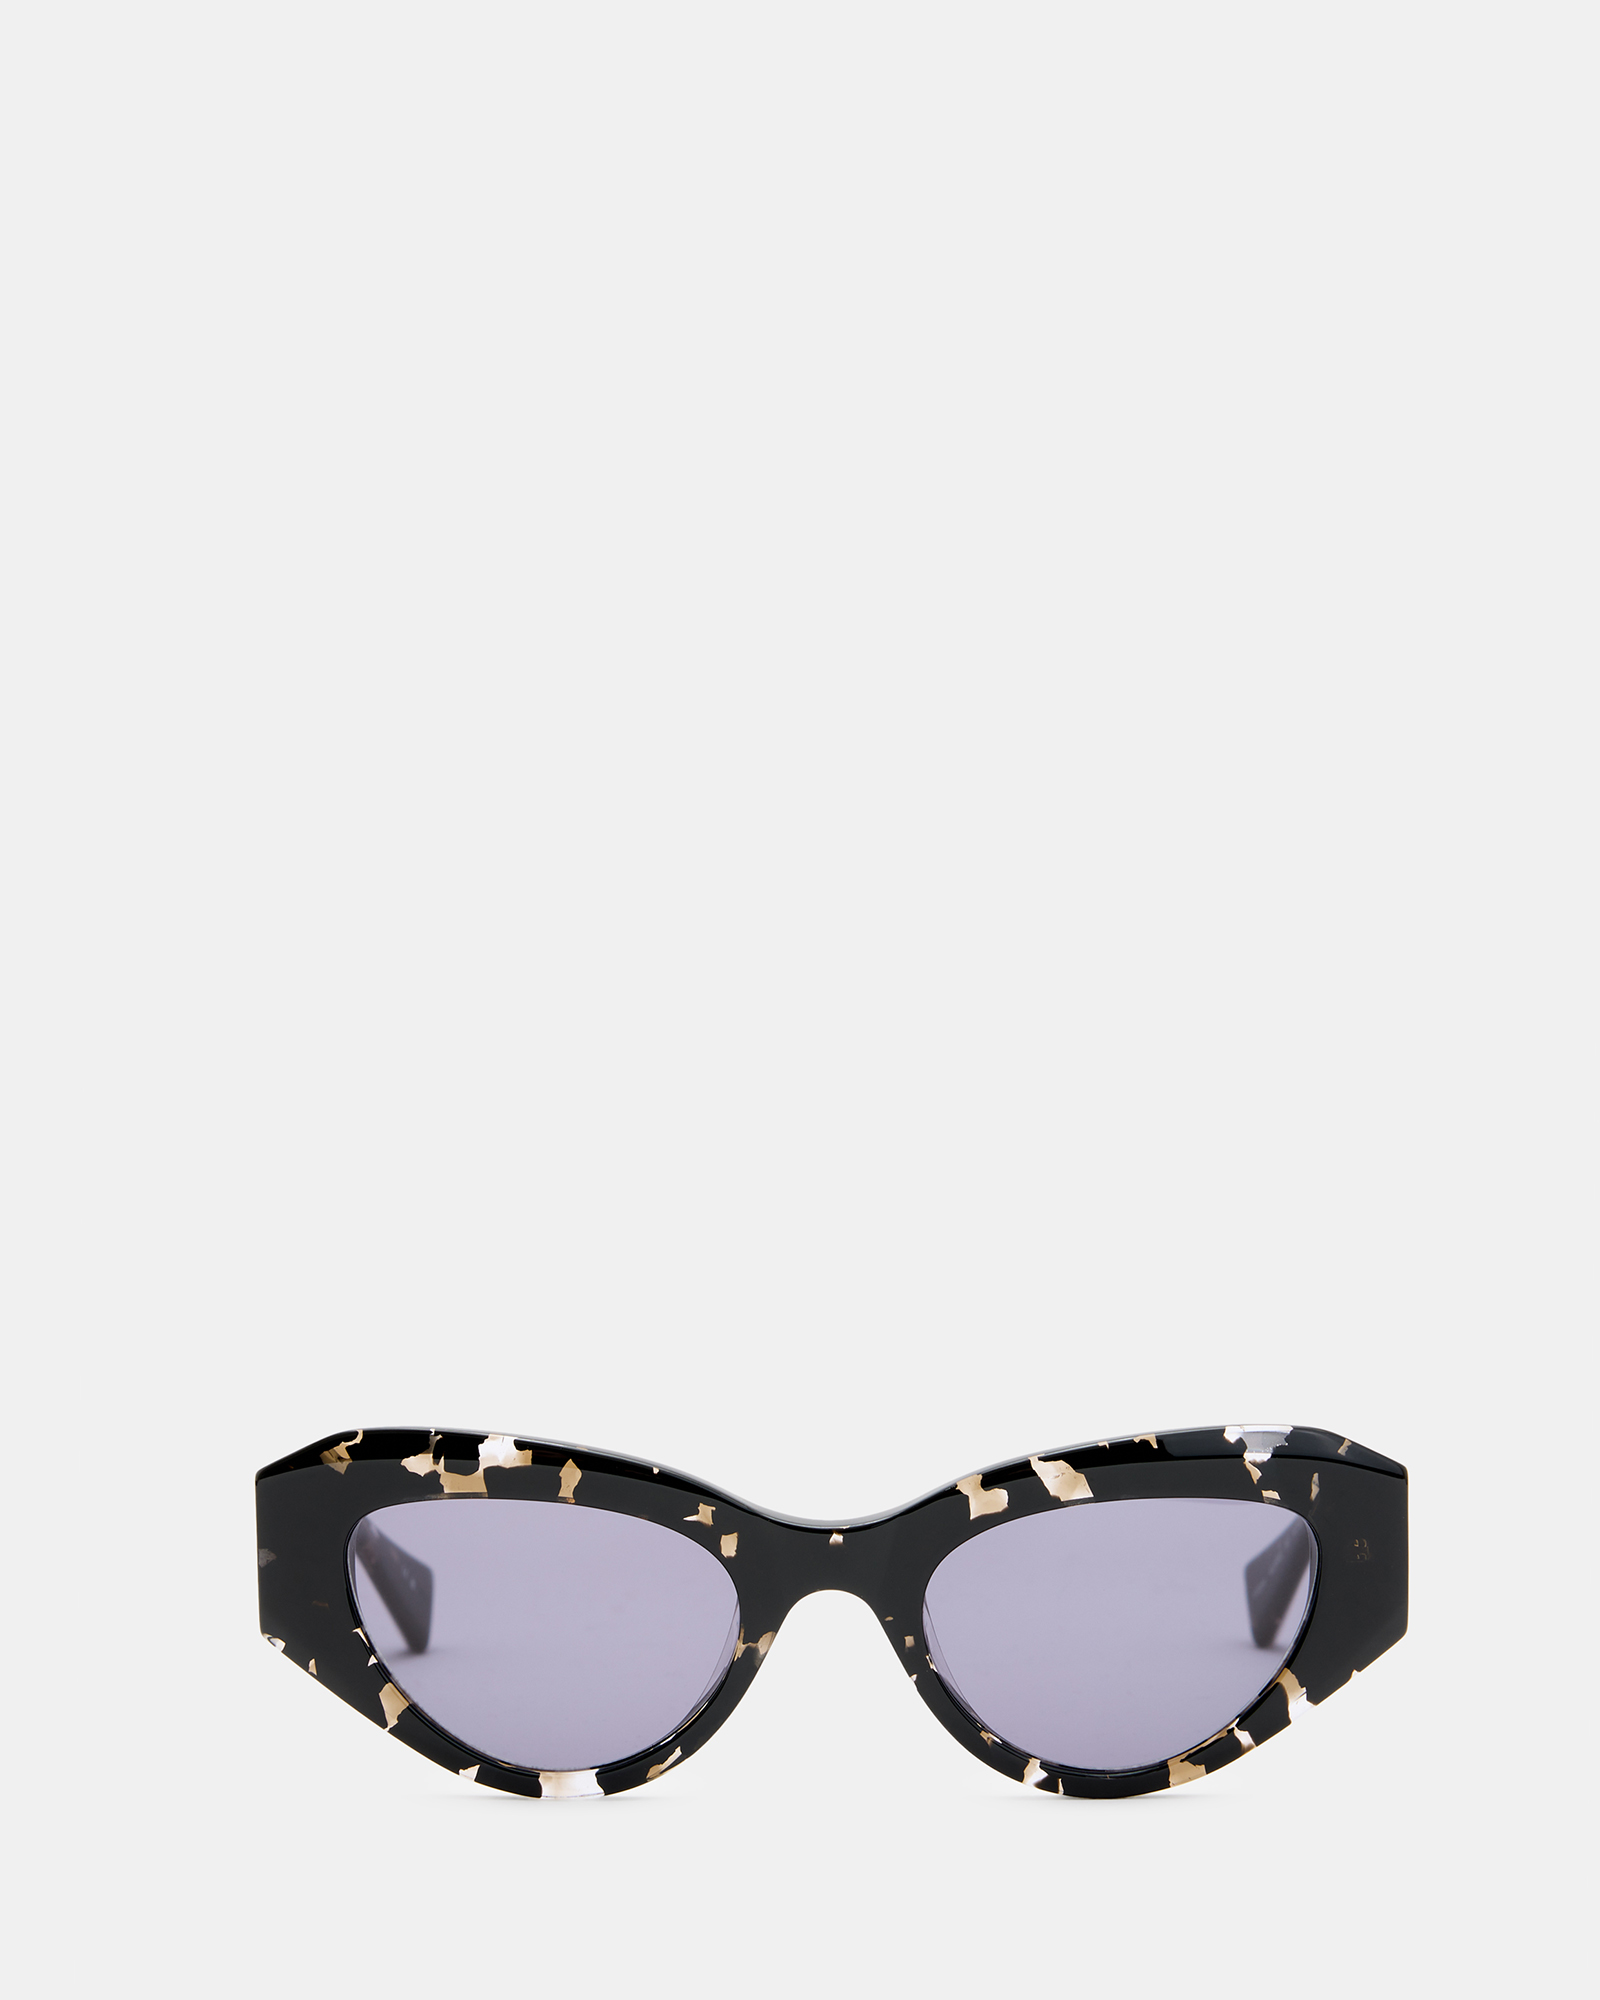 AllSaints Calypso Bevelled Cat Eye Sunglasses,, Size: One